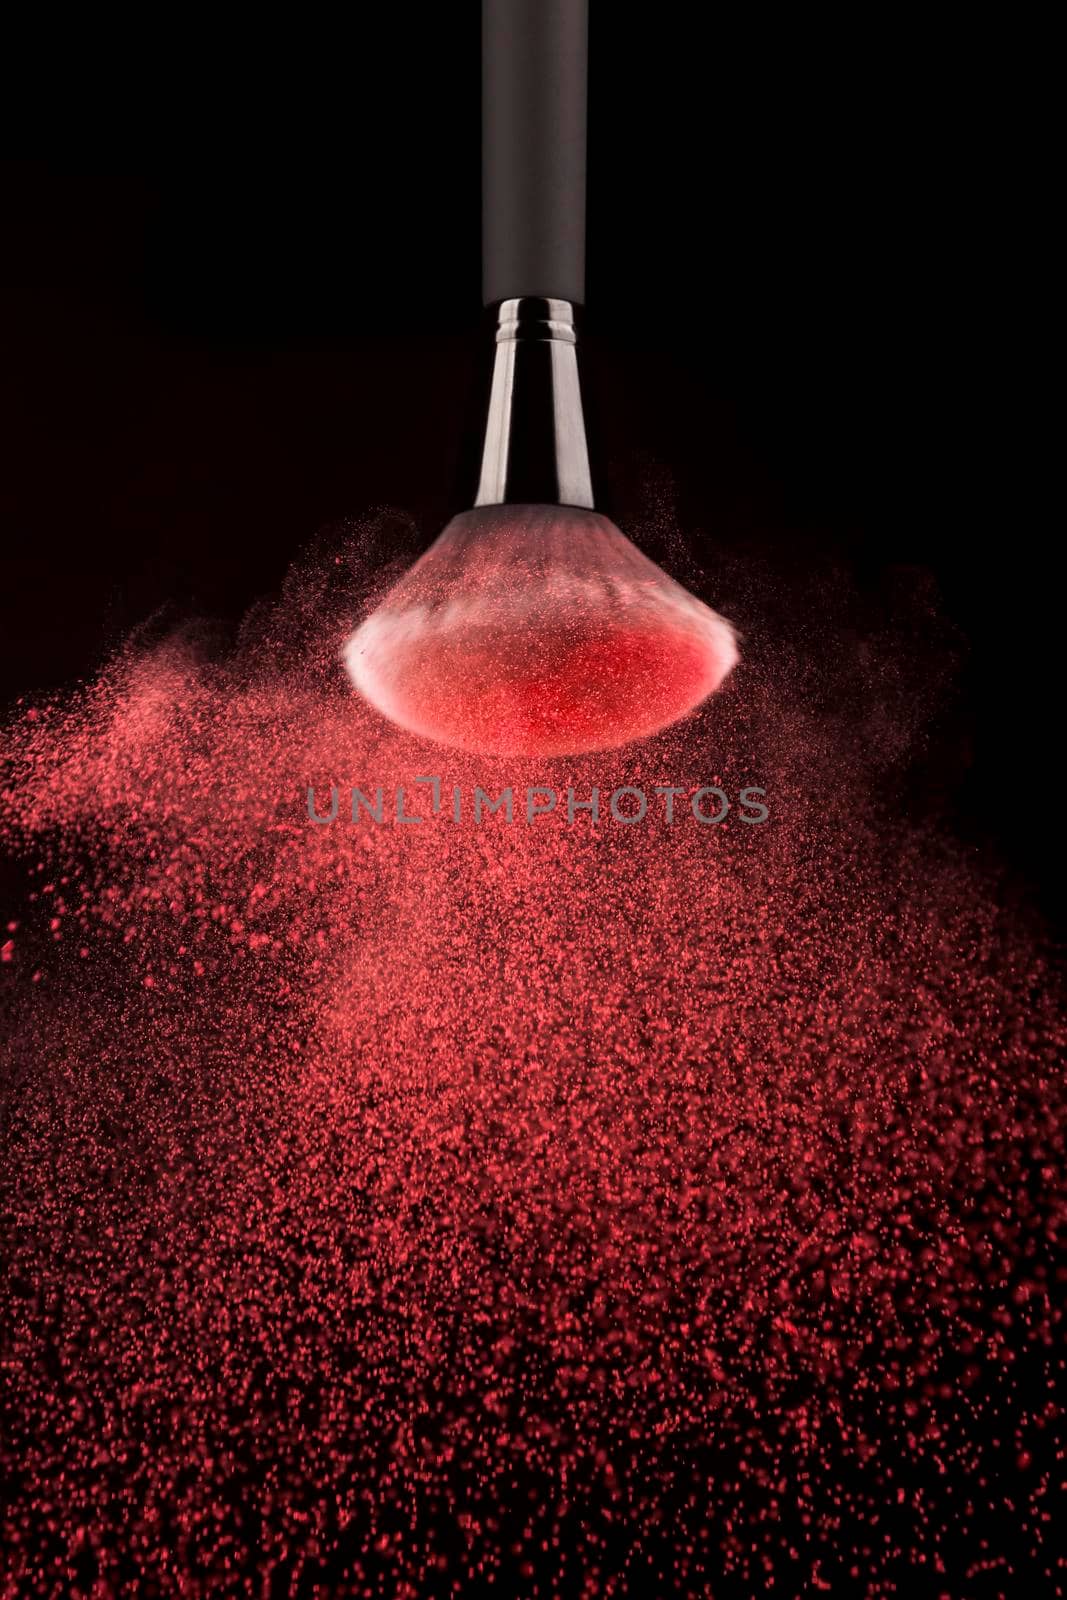 upside down makeup brush red powder splash. High quality photo by Zahard